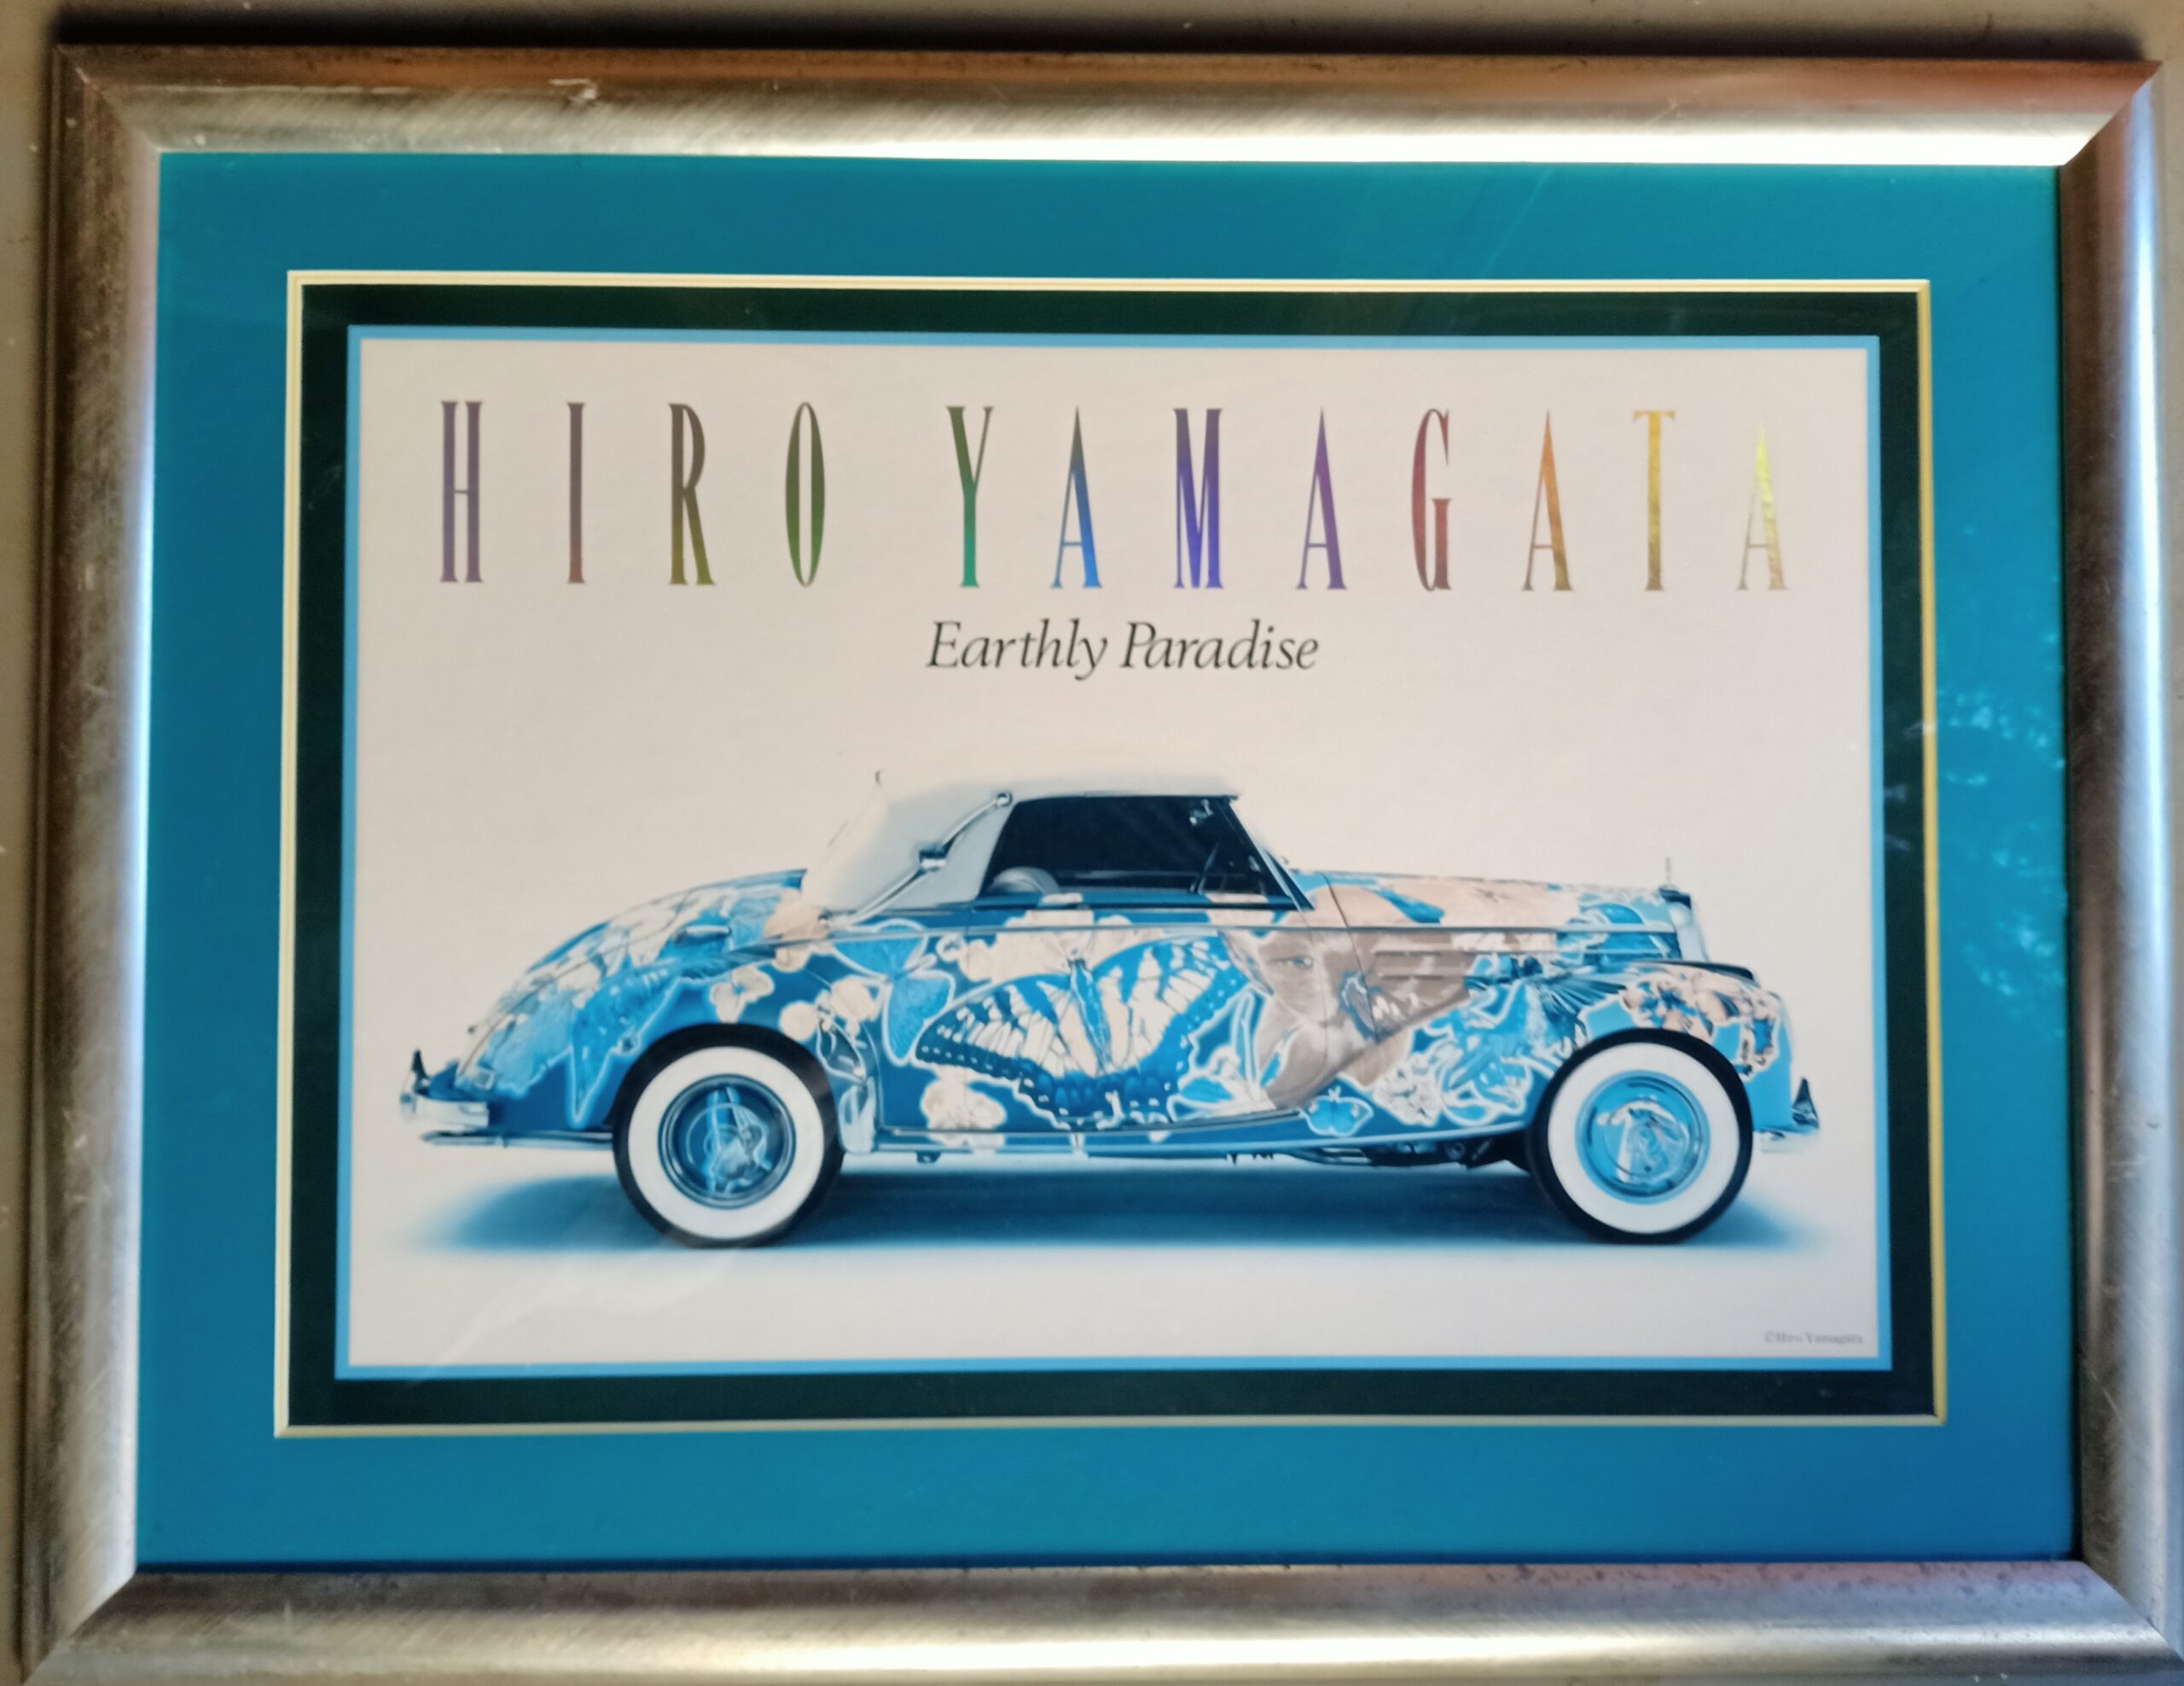 A Collection of Hiro Yamagata Prints